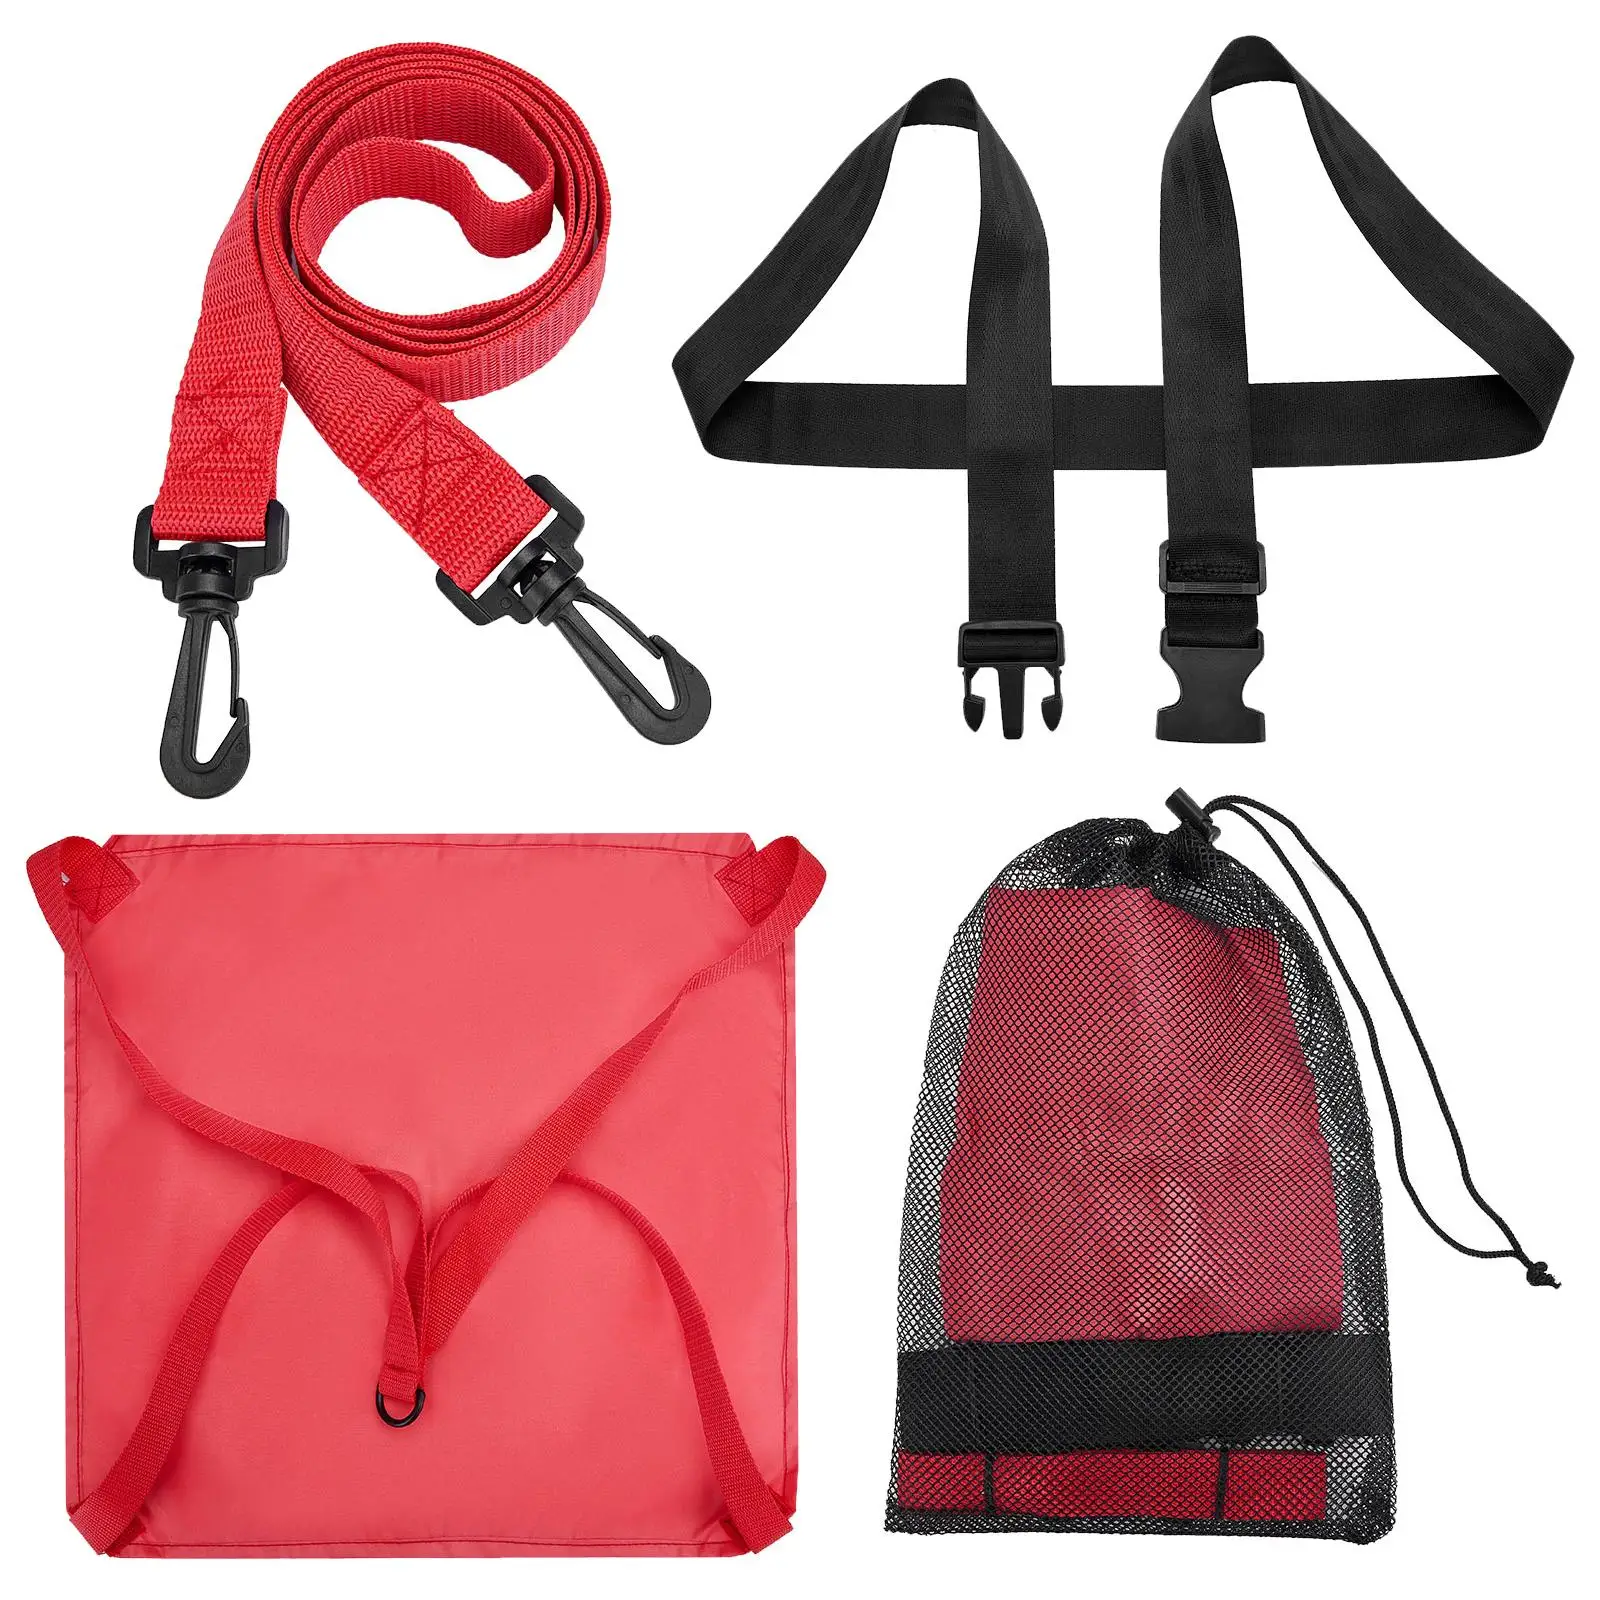 Swim Parachute Agility Training Swimming Resistance Belt with Drag for Women Men